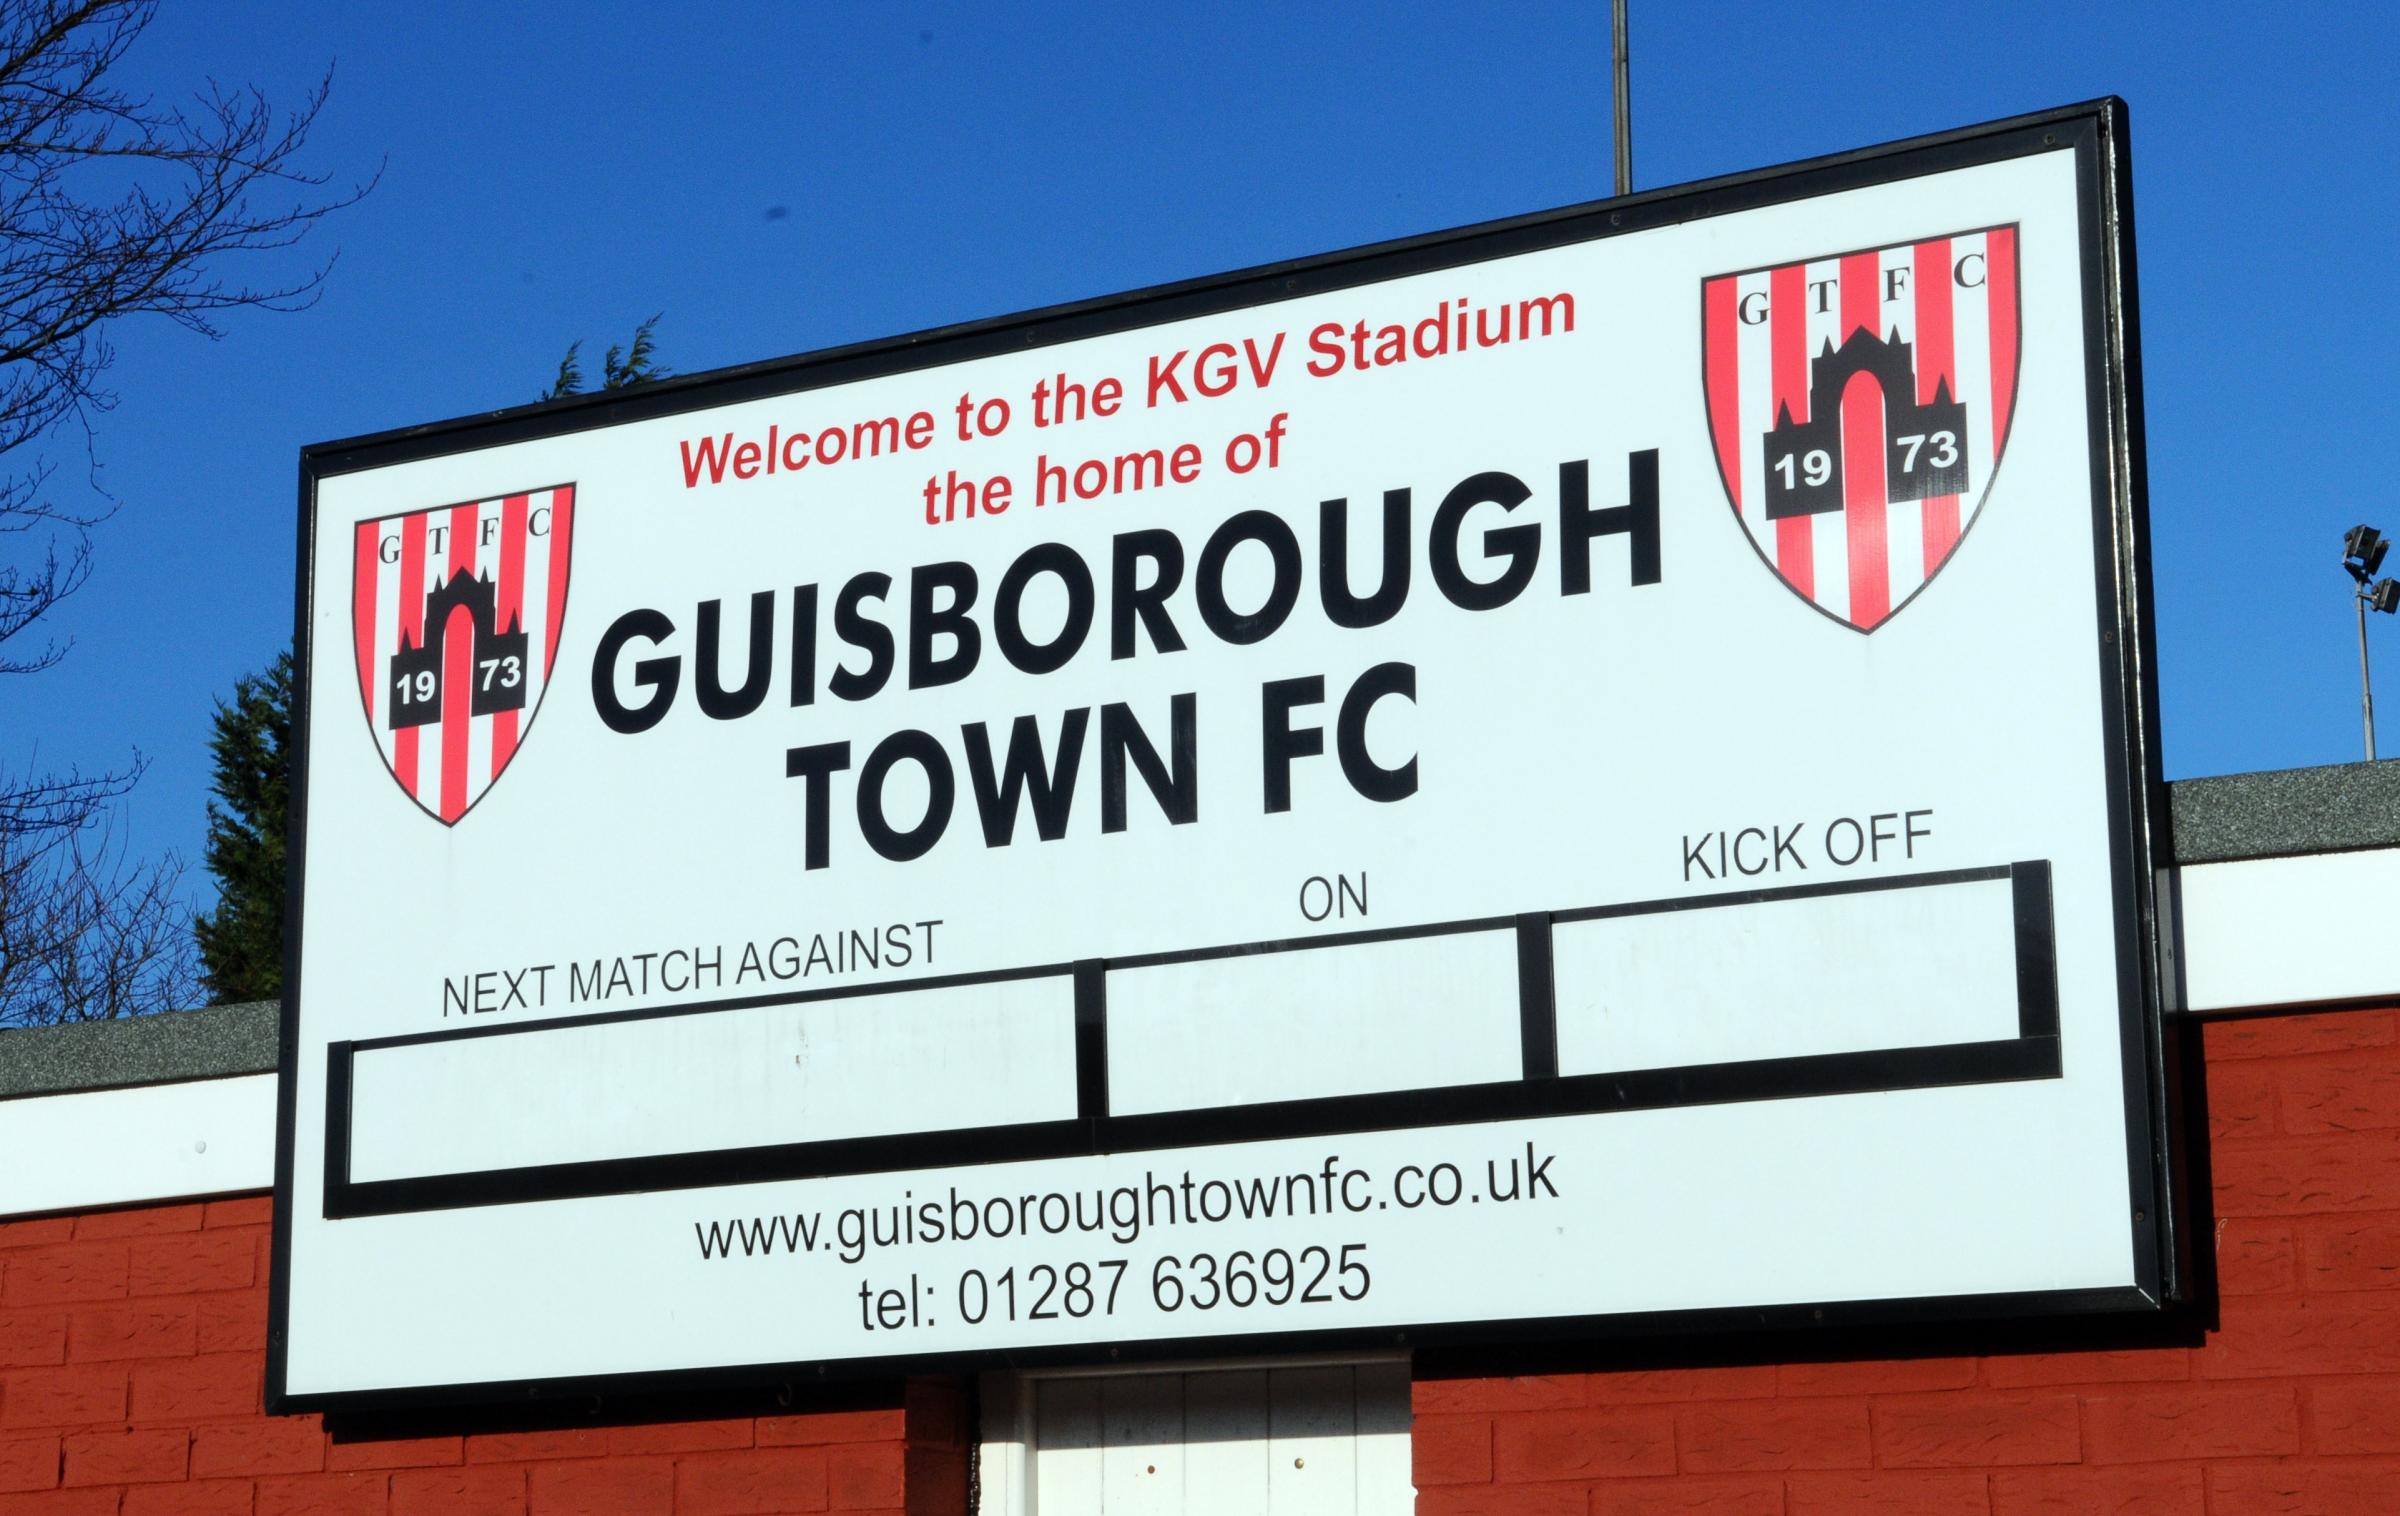 King George V stadium, home to Guisborough Town